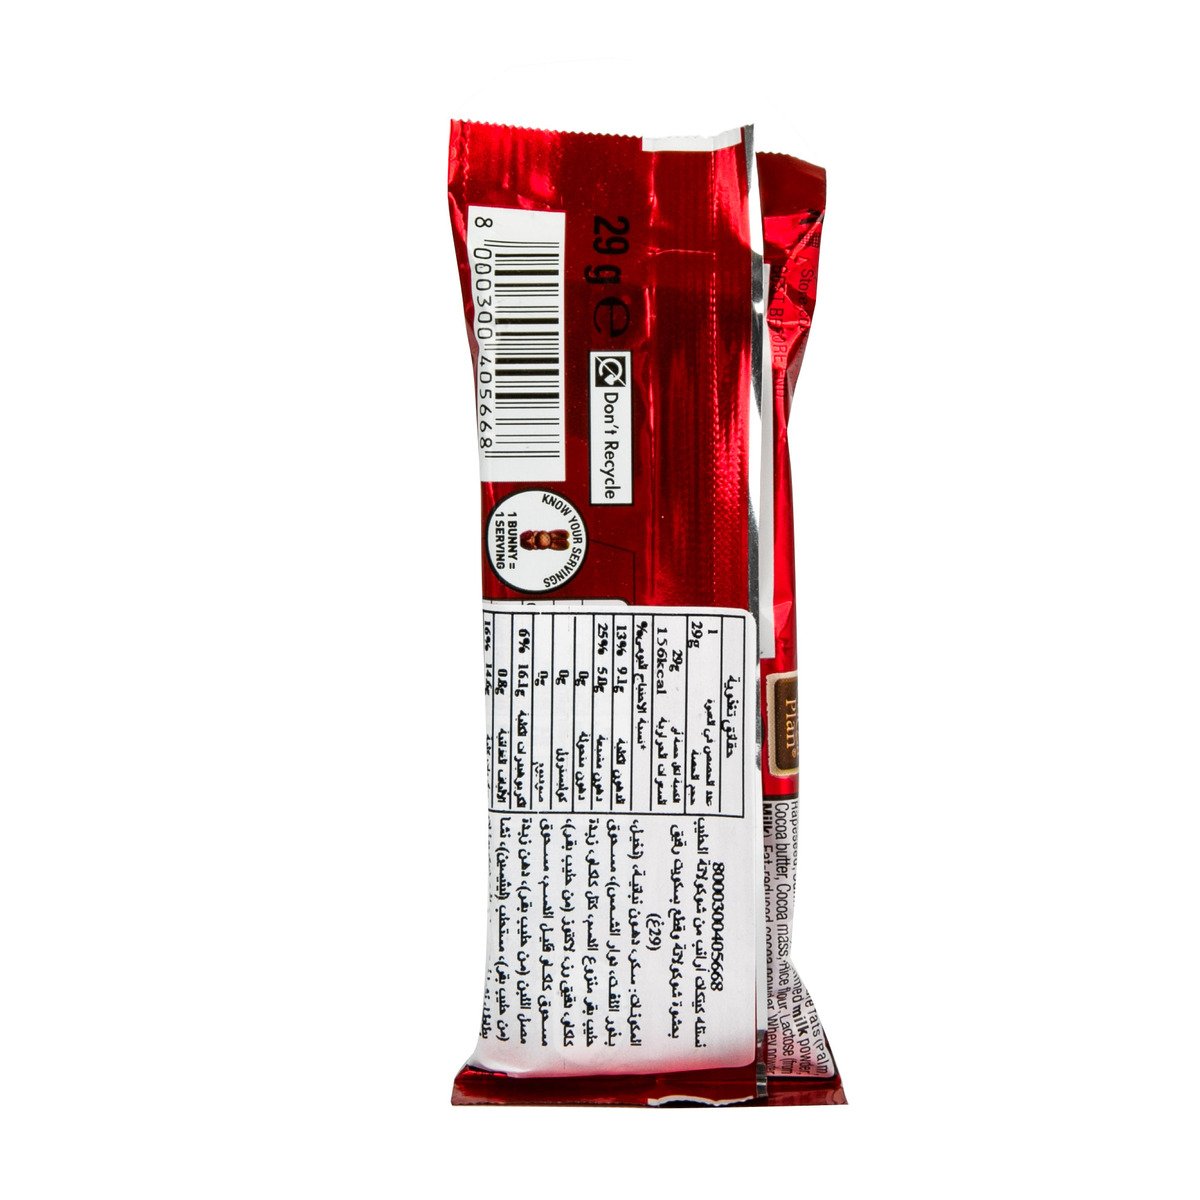 Nestle KitKat Chocolate Bunny 29 g